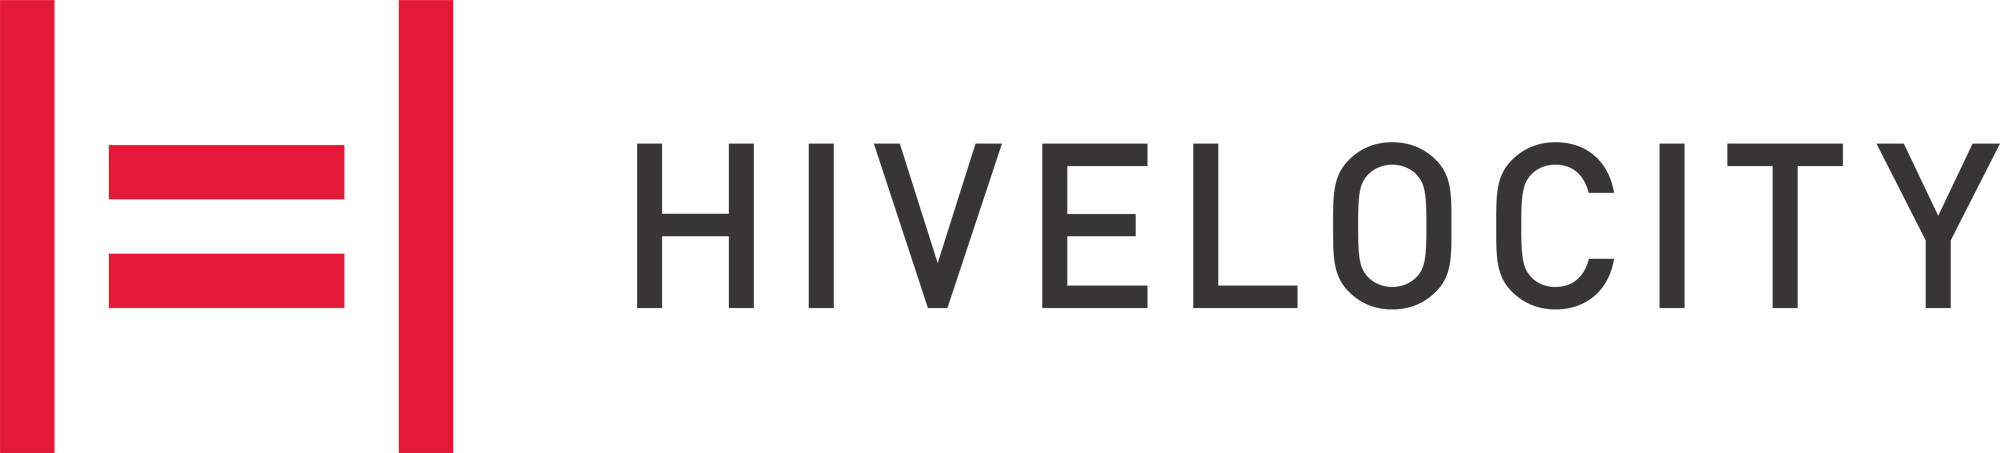 Hivelocity Logo 2000px